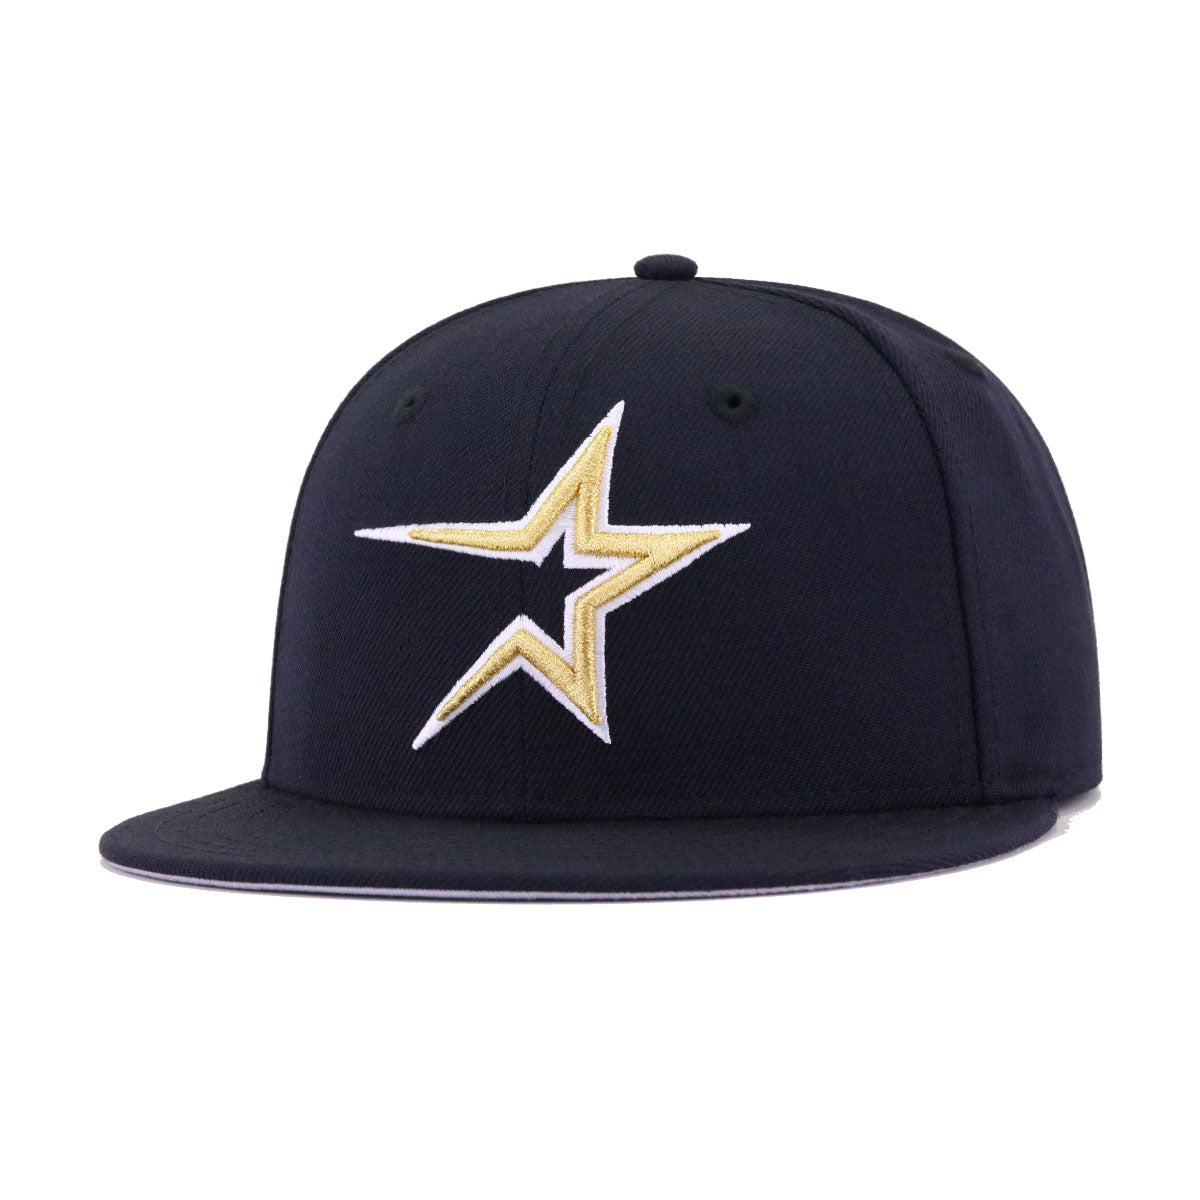 Houston Astros New Era Cooperstown Collection Team Classic 39THIRTY Flex Hat - Navy